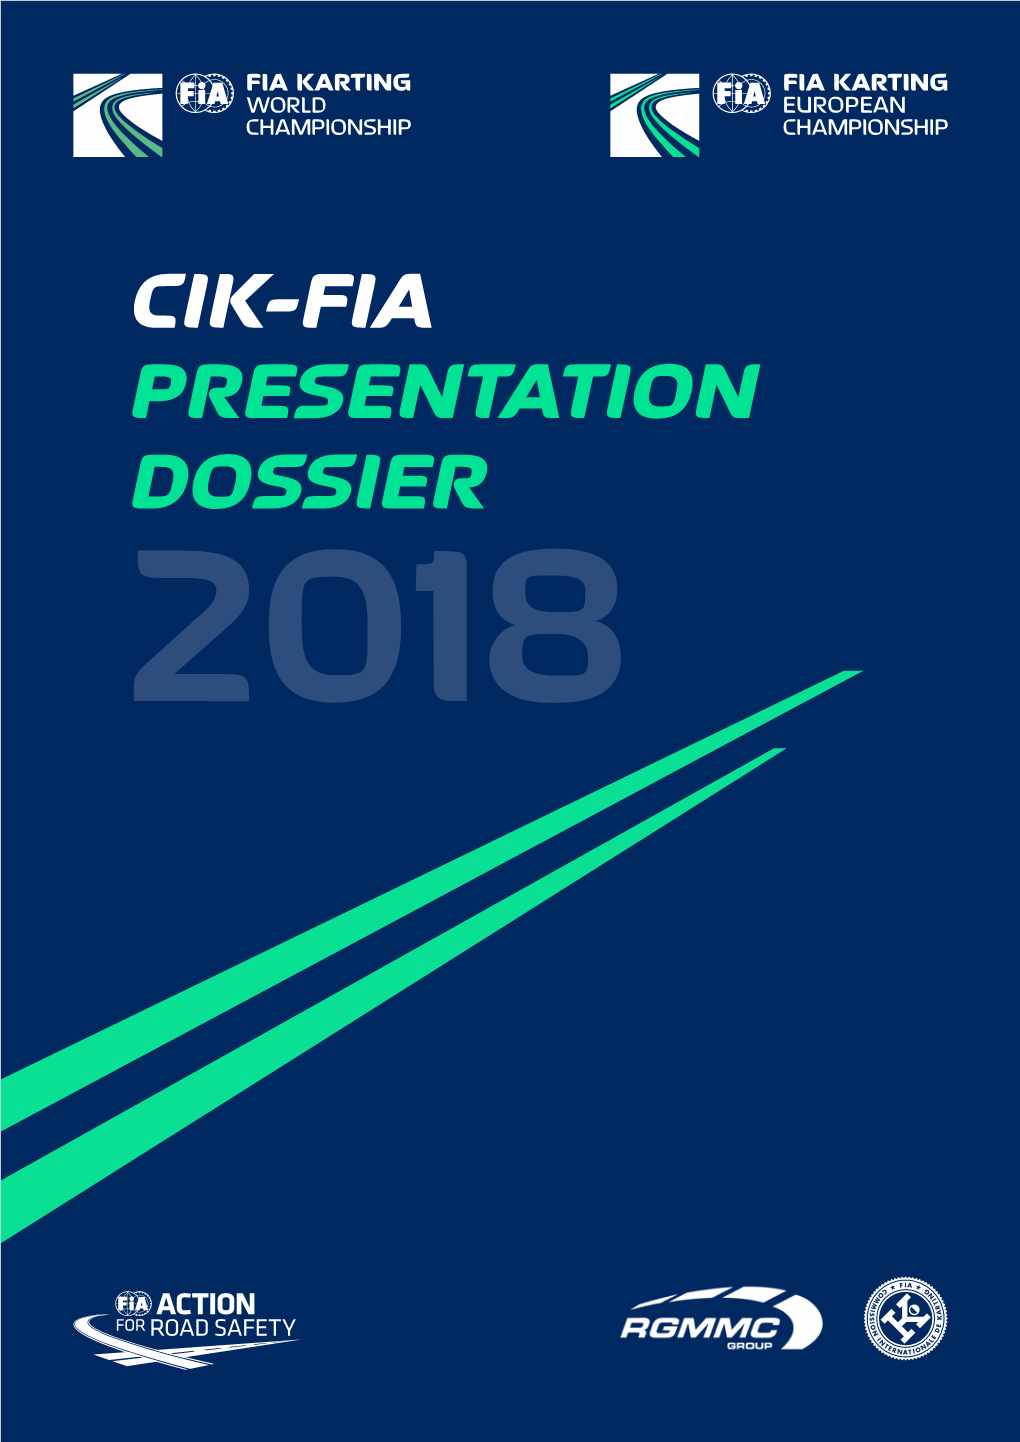 CIK-FIA PRESENTATION DOSSIER 2018 2018 CIK-FIA Presentation Dossier 2018 CIK-FIA Presentation Dossier